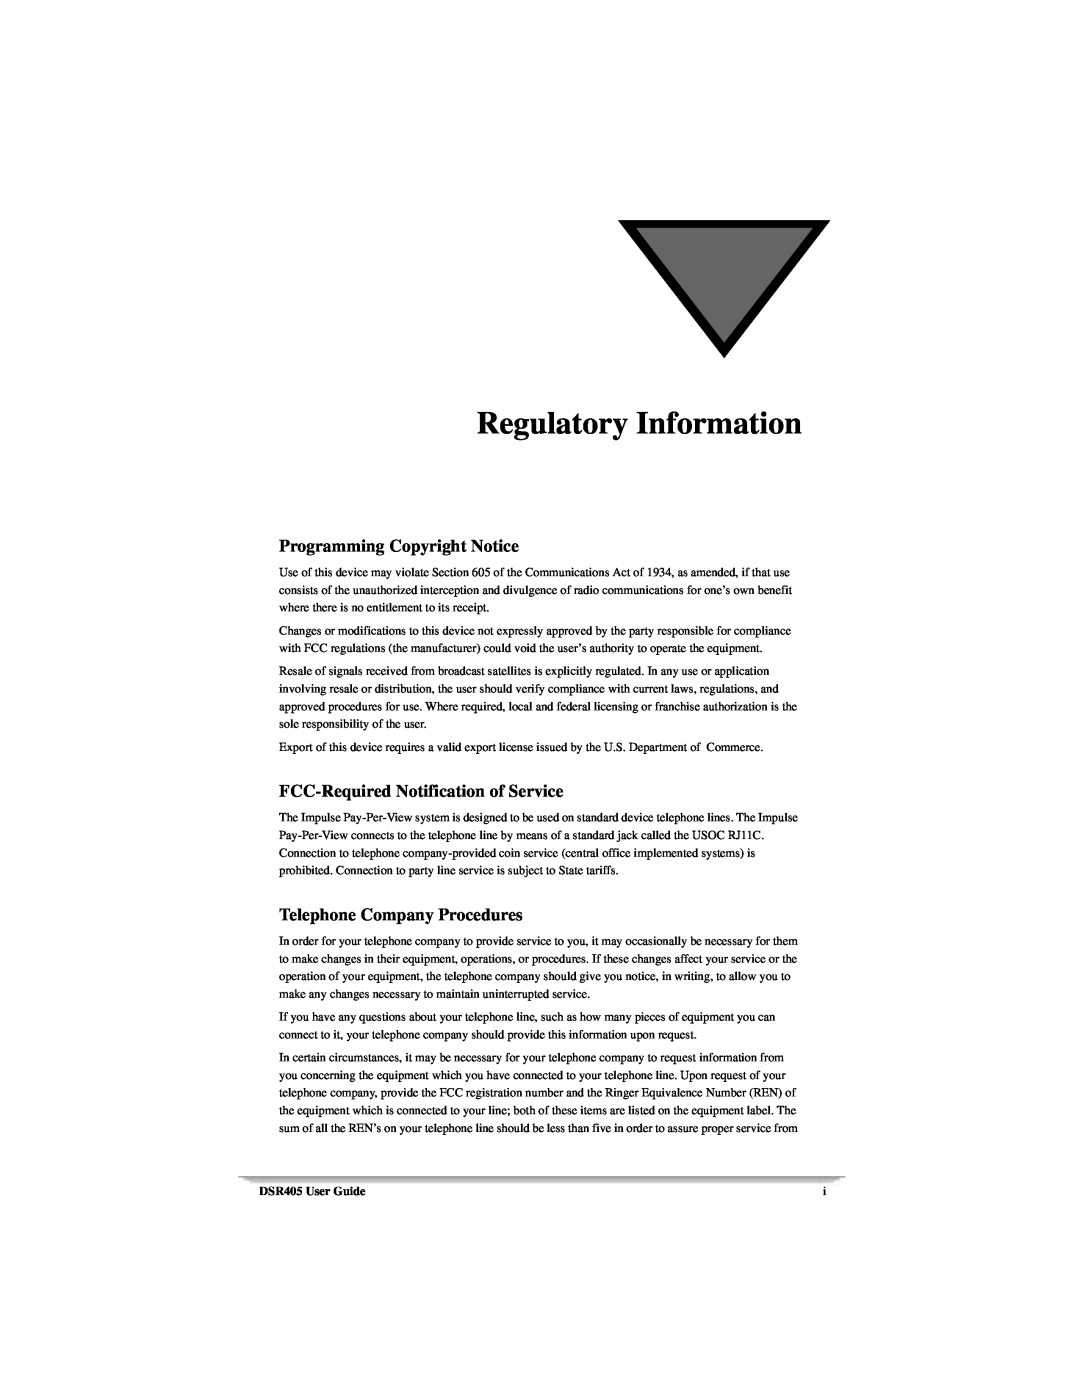 Motorola DSR405 manual Regulatory Information, Programming Copyright Notice, FCC-Required Notification of Service 